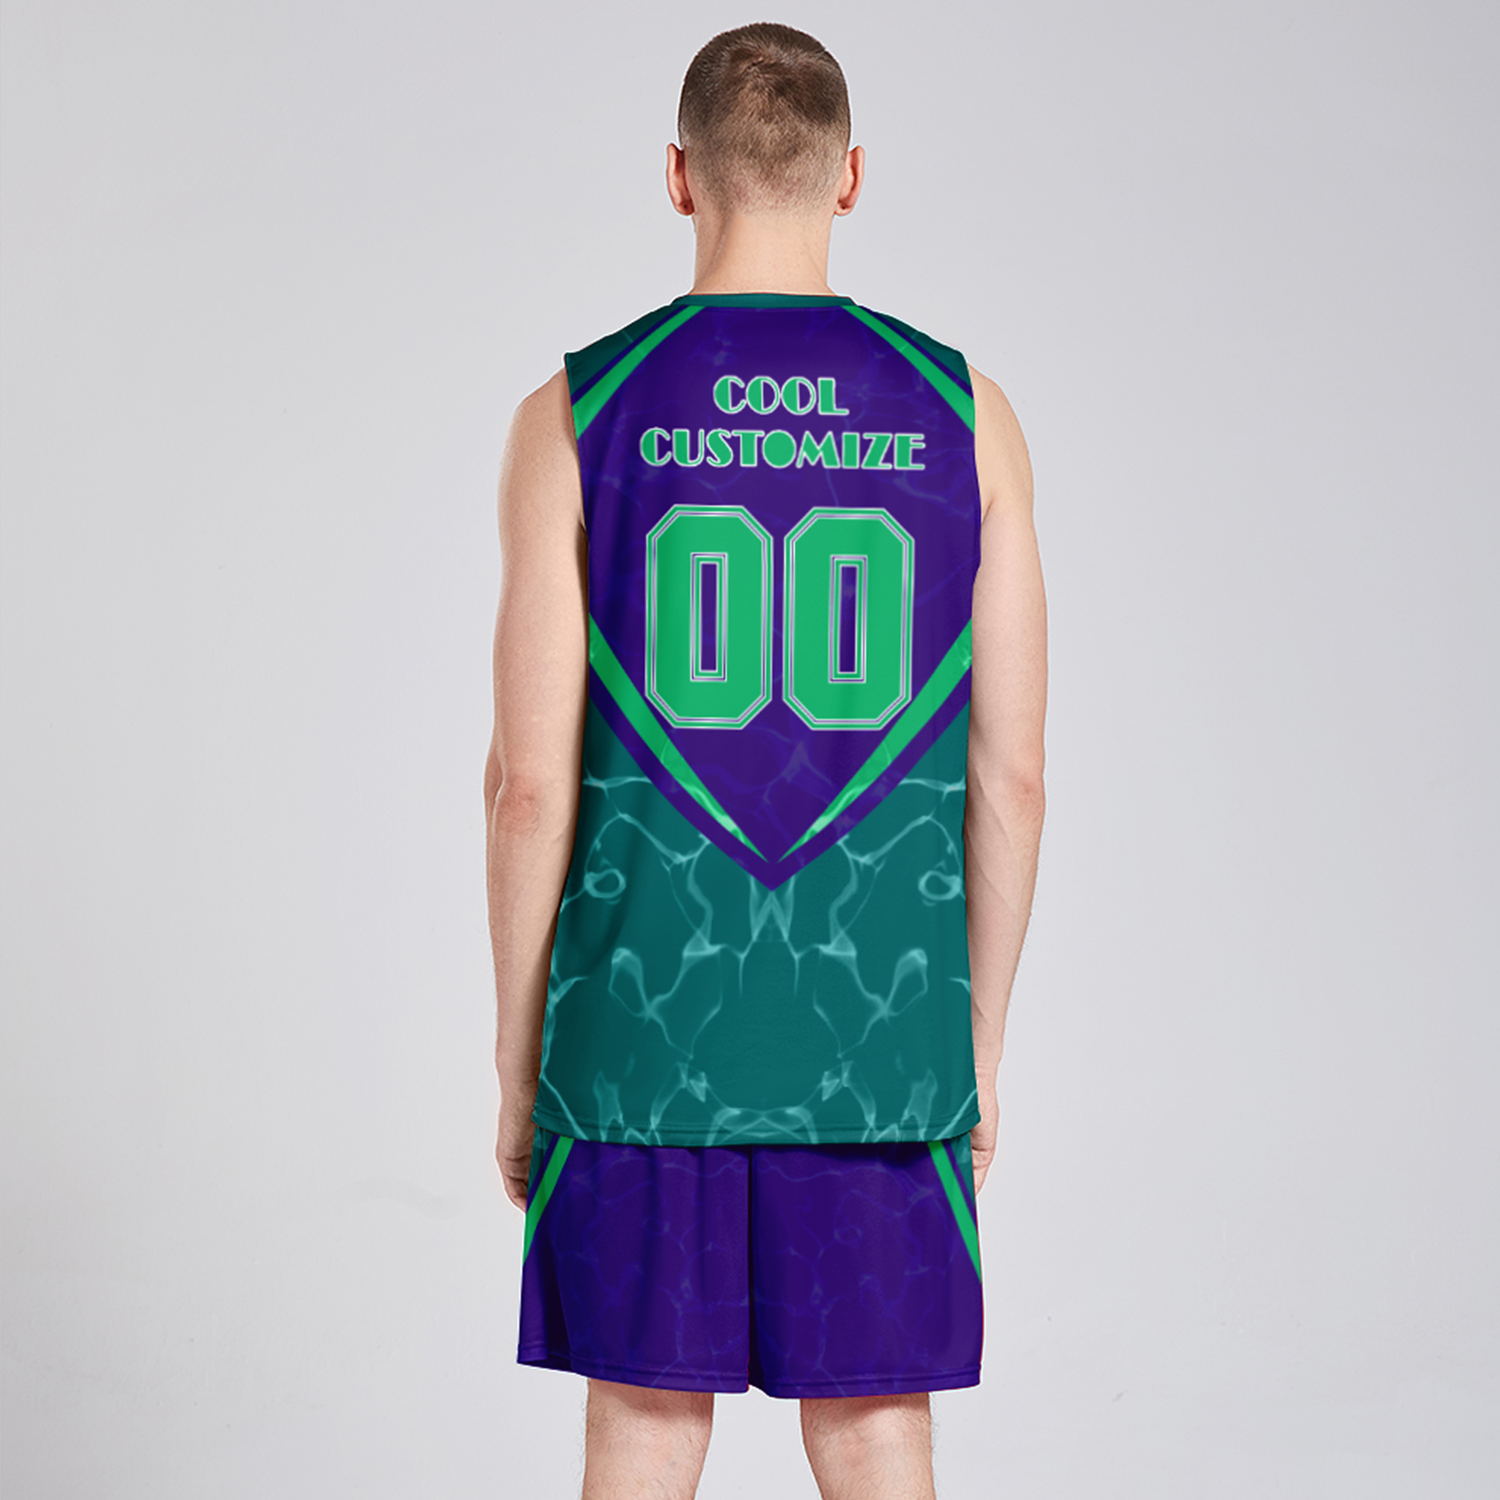 Cool Customize Personalized Design Sublimation Basketball Jerseys Plain Sports Shirts Custom Pattern Basketball Uniforms